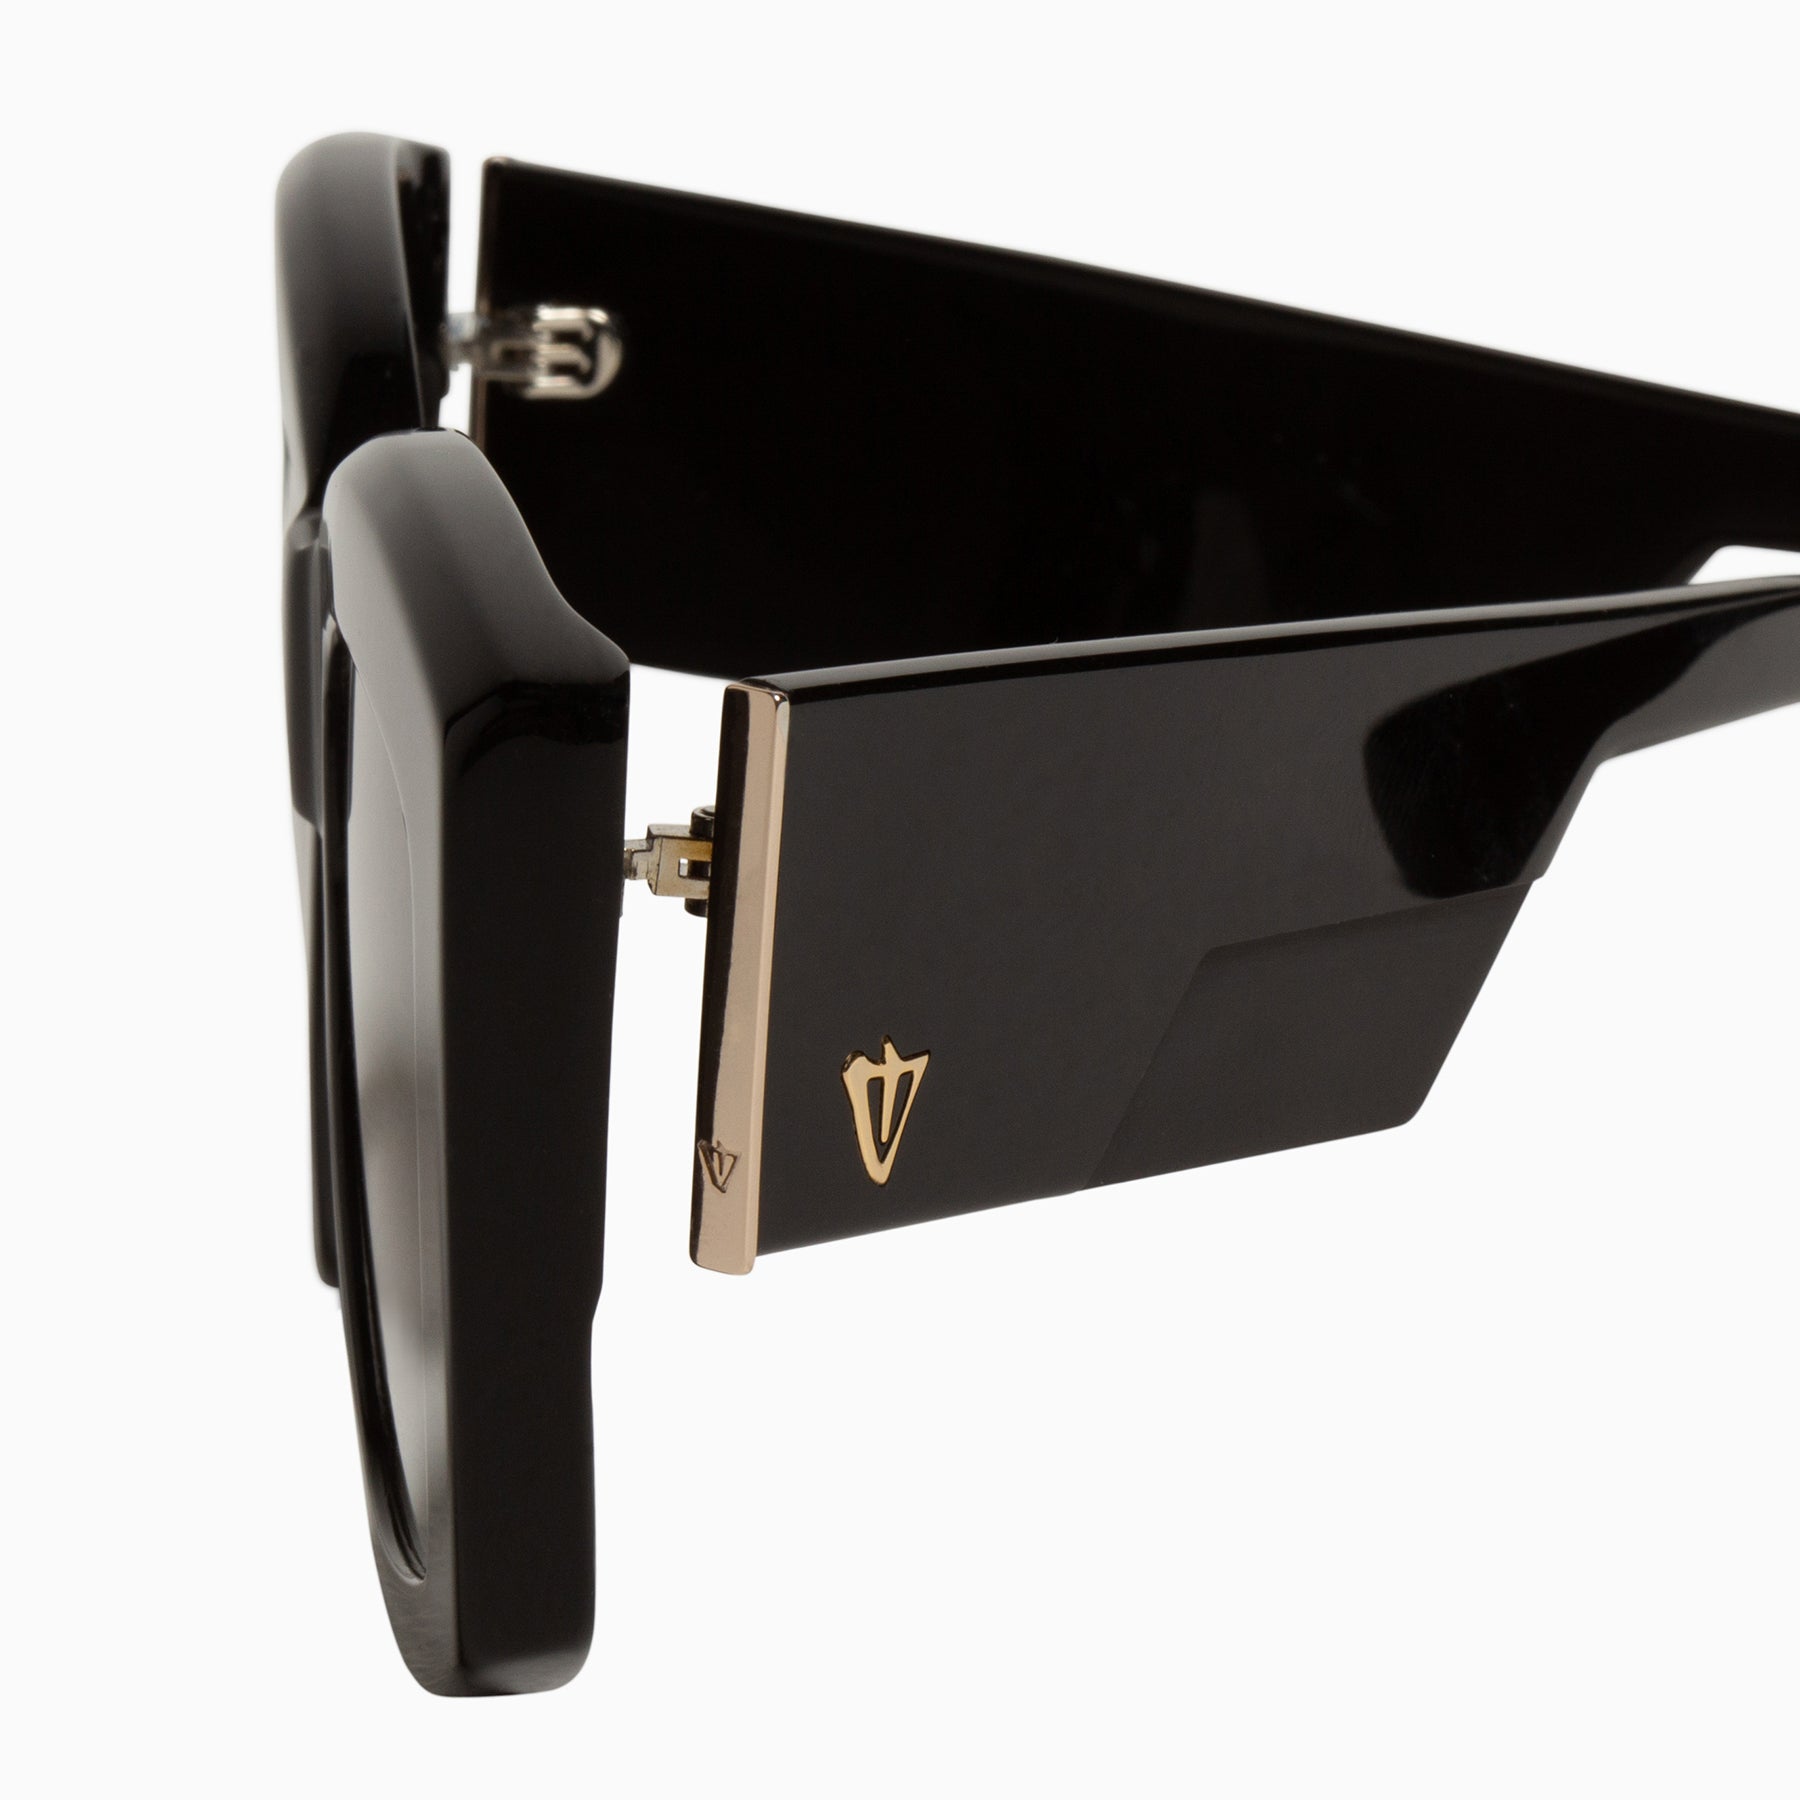 Louis Vuitton LV Edge Large Square Sunglasses Black Acetate & Metal. Size W